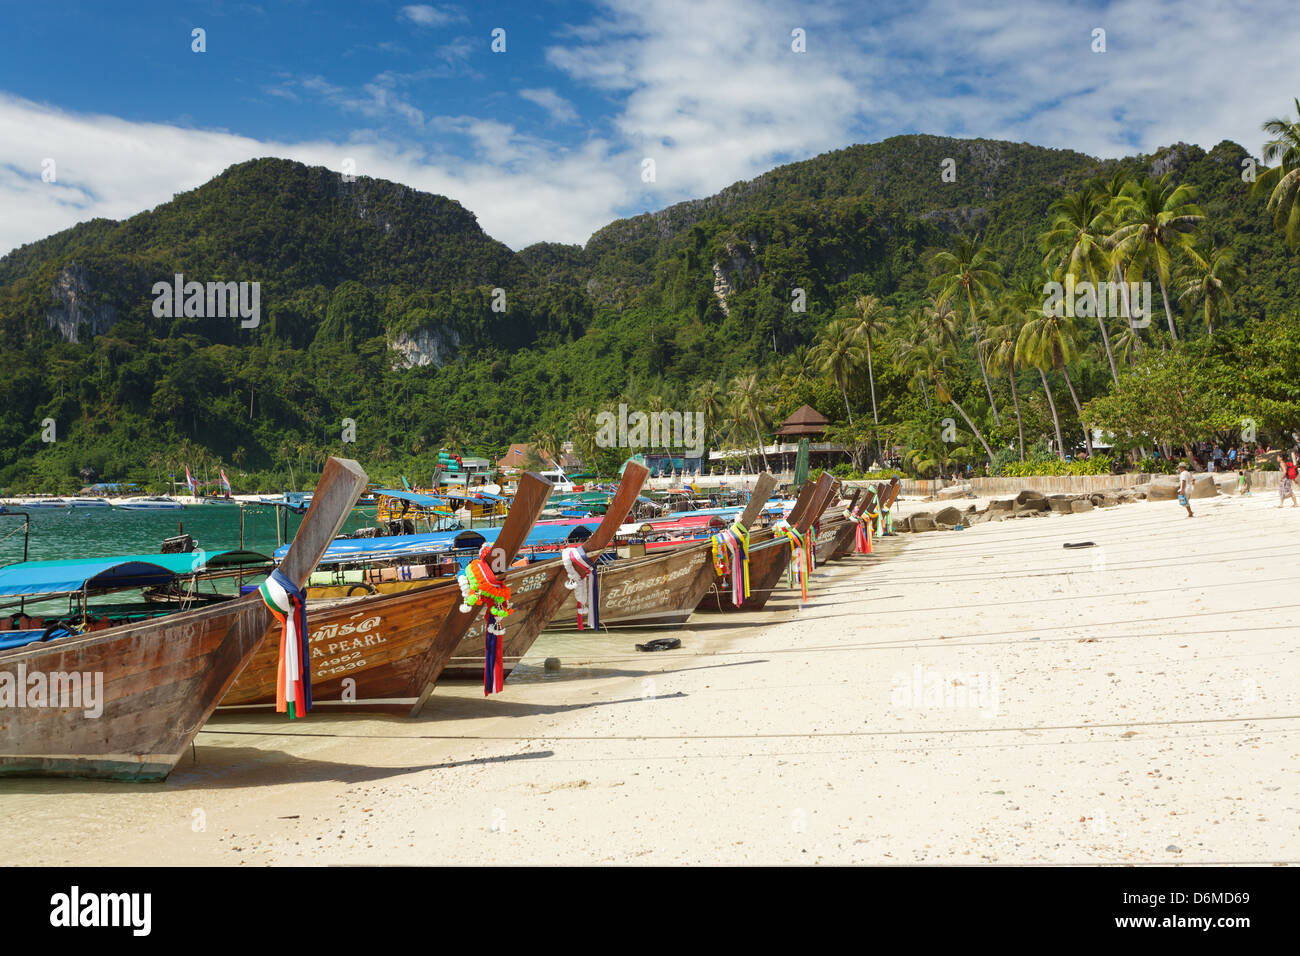 Ton sai bay in ko phi phi island, Thailand Stock Photo